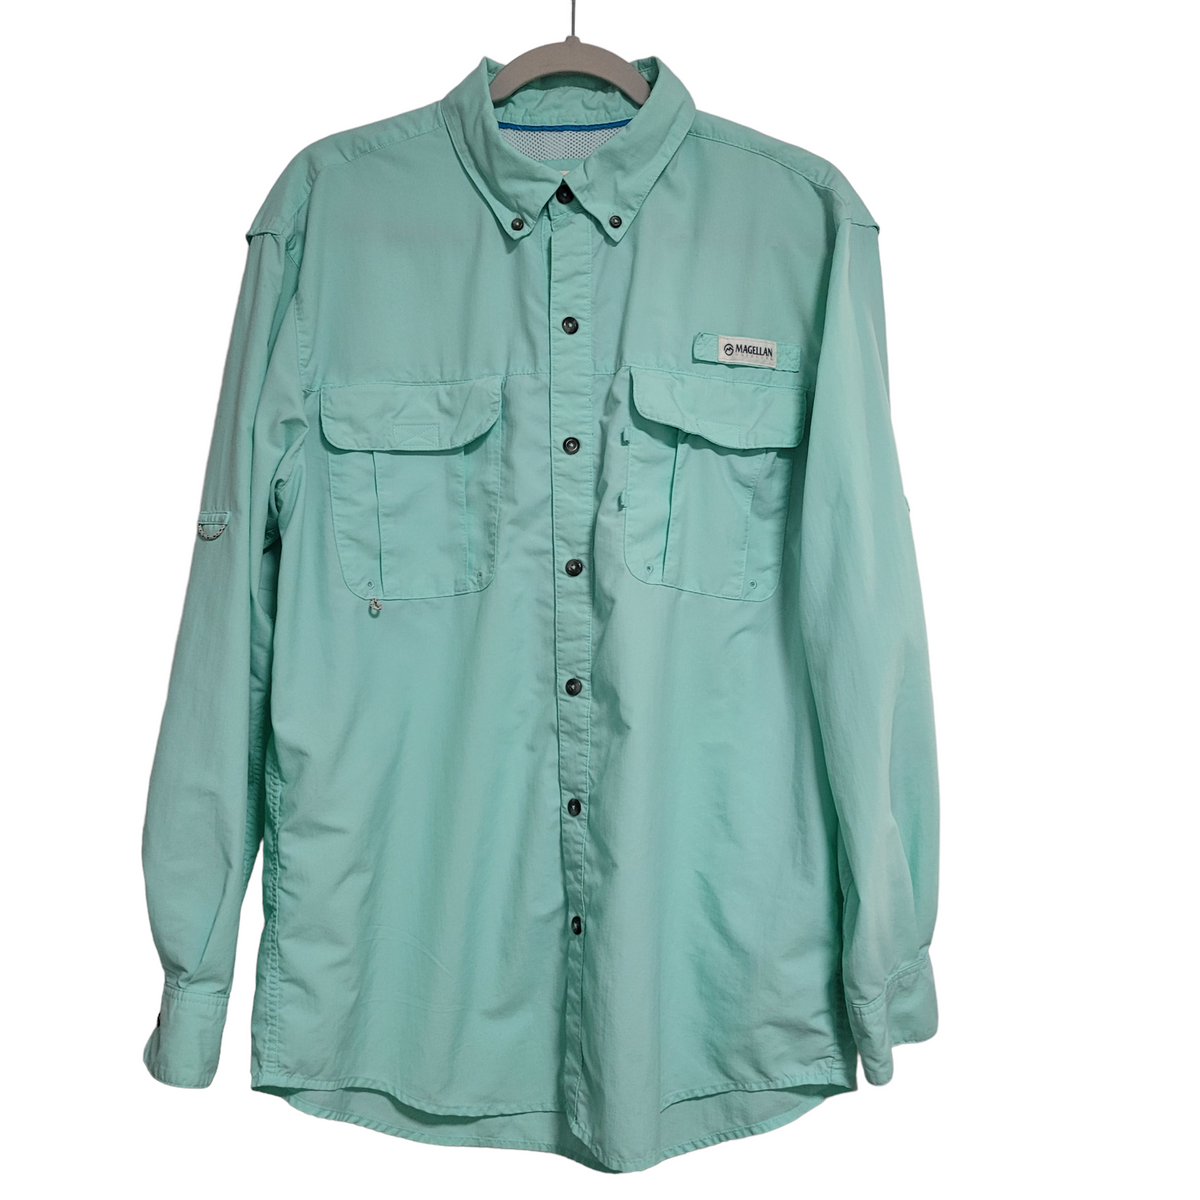 magellan men’s XL cotton polyester blue green button down fishing shirt